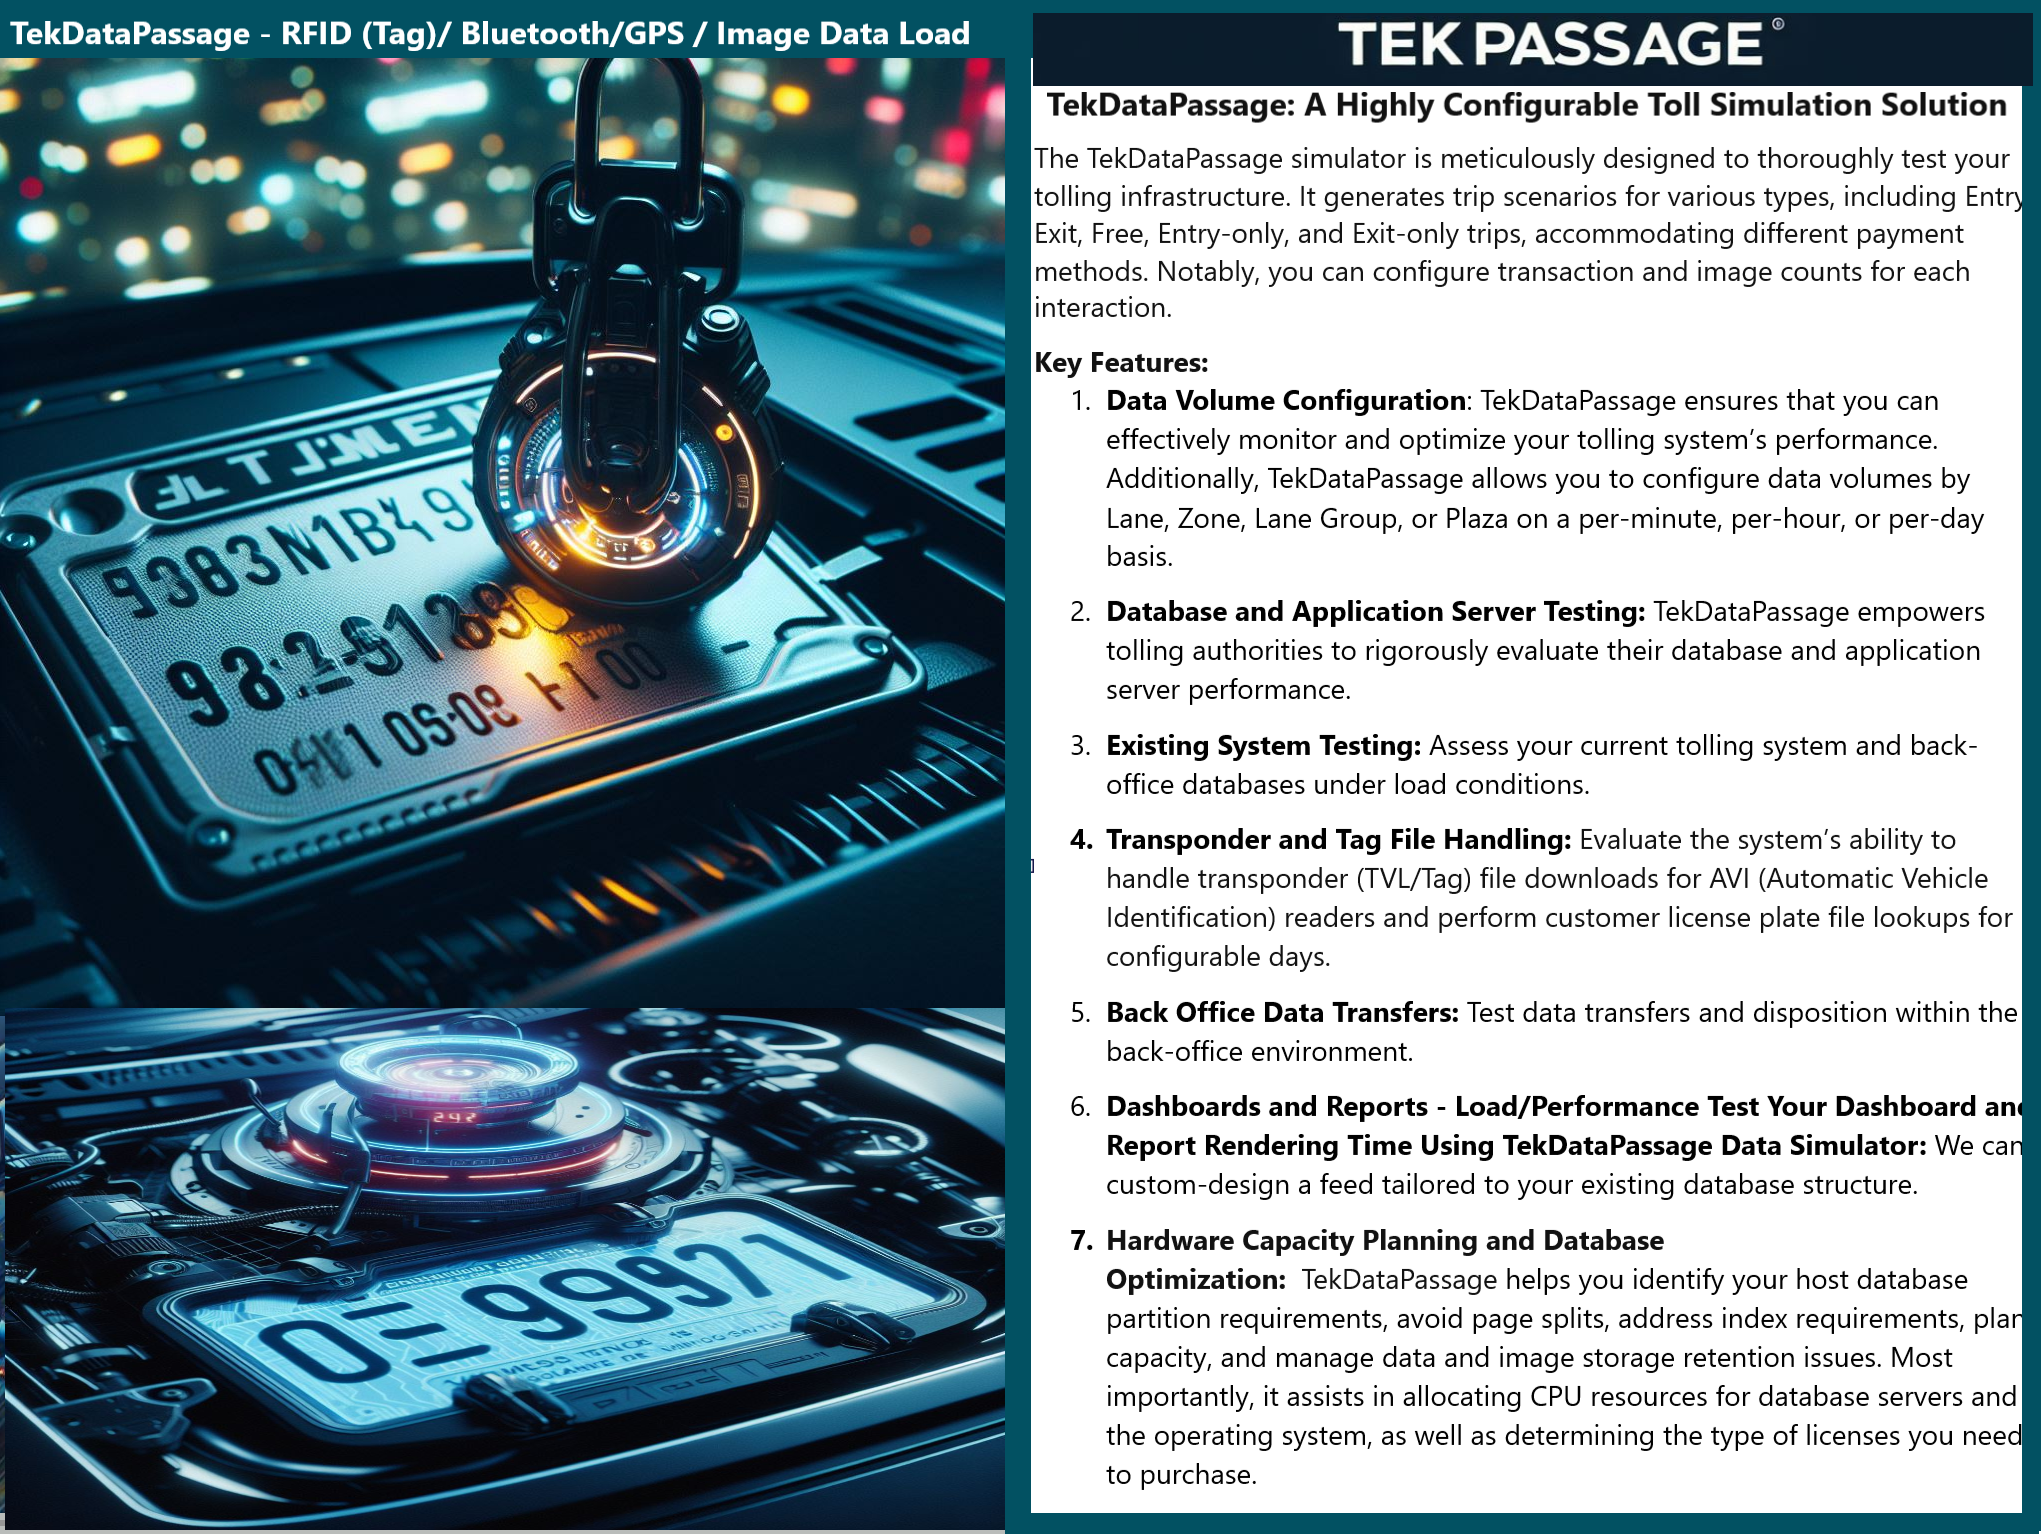  TekDataPassage: A Highly Configurable Toll Simulation Solution